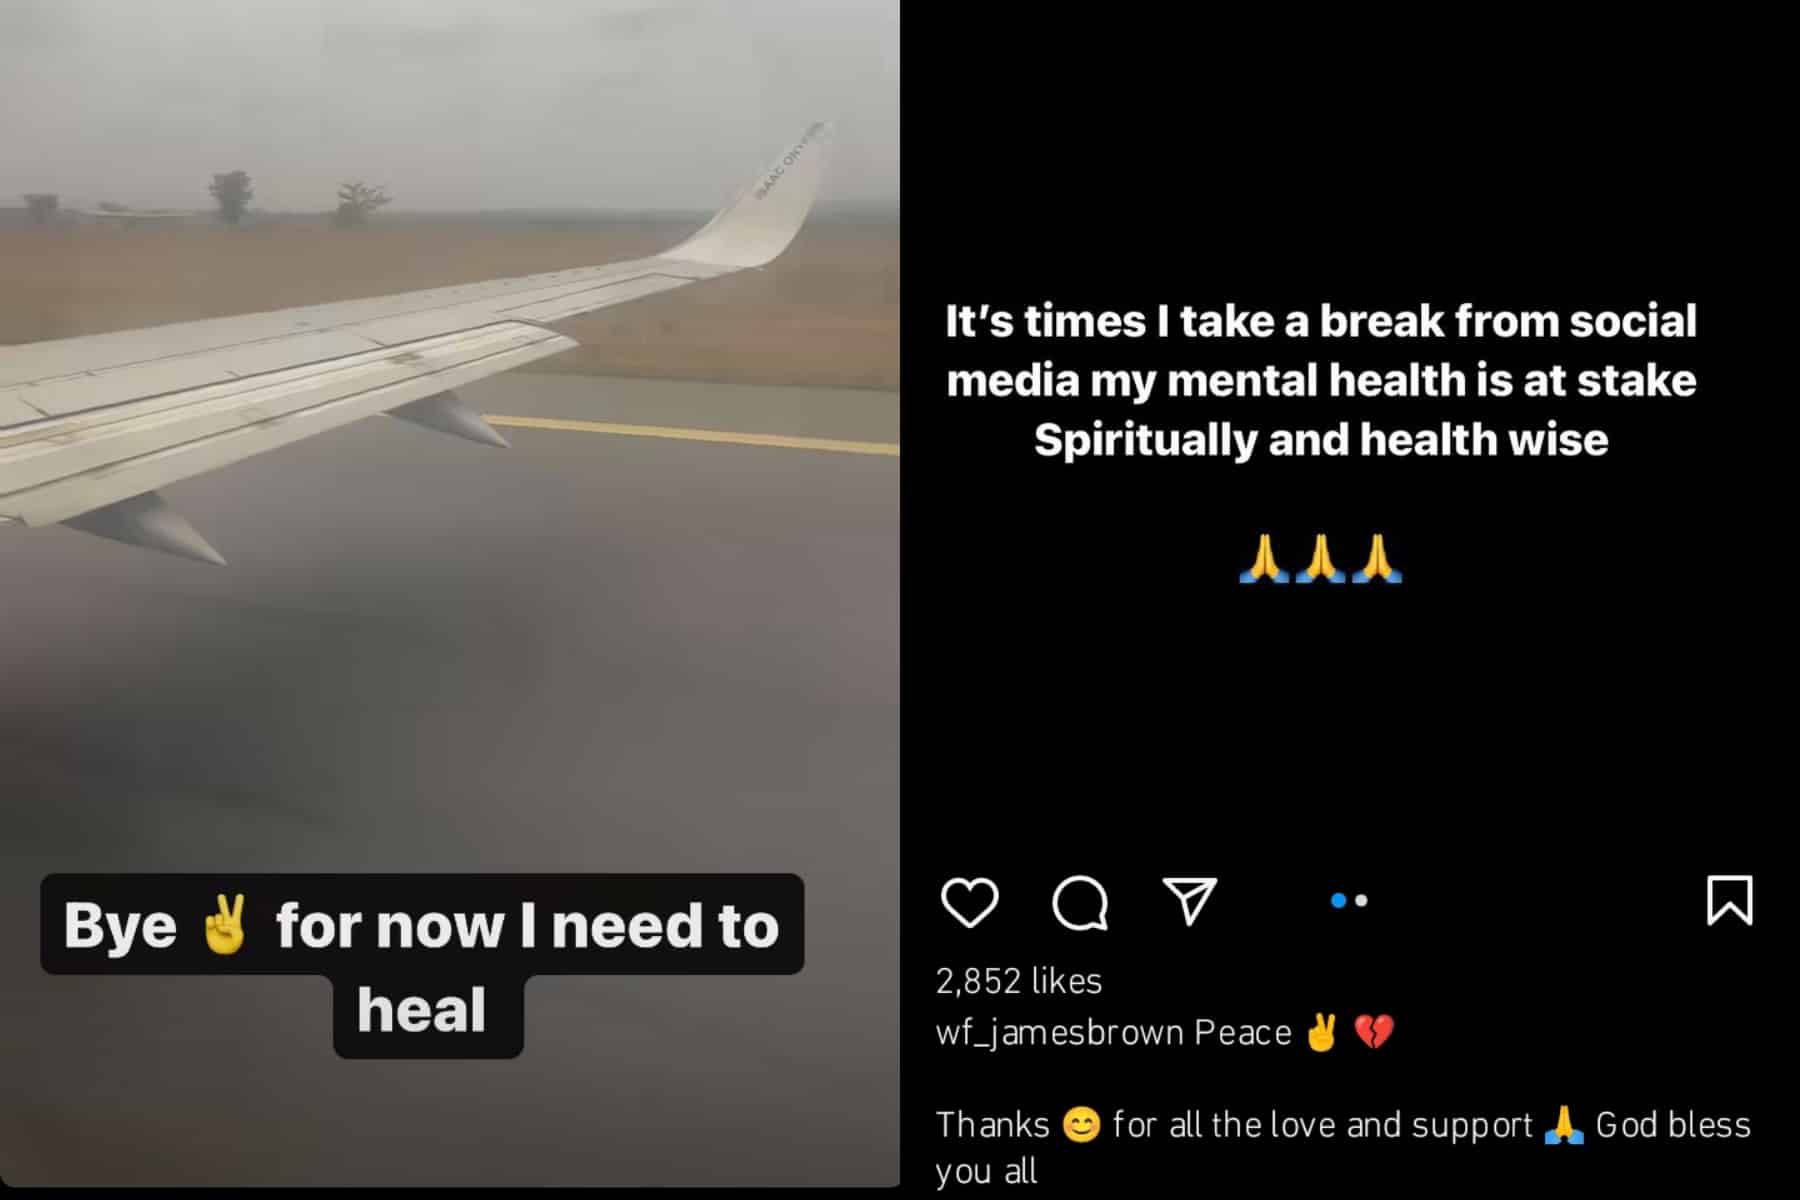 James Brown bemoans mental health struggle, takes break from social media